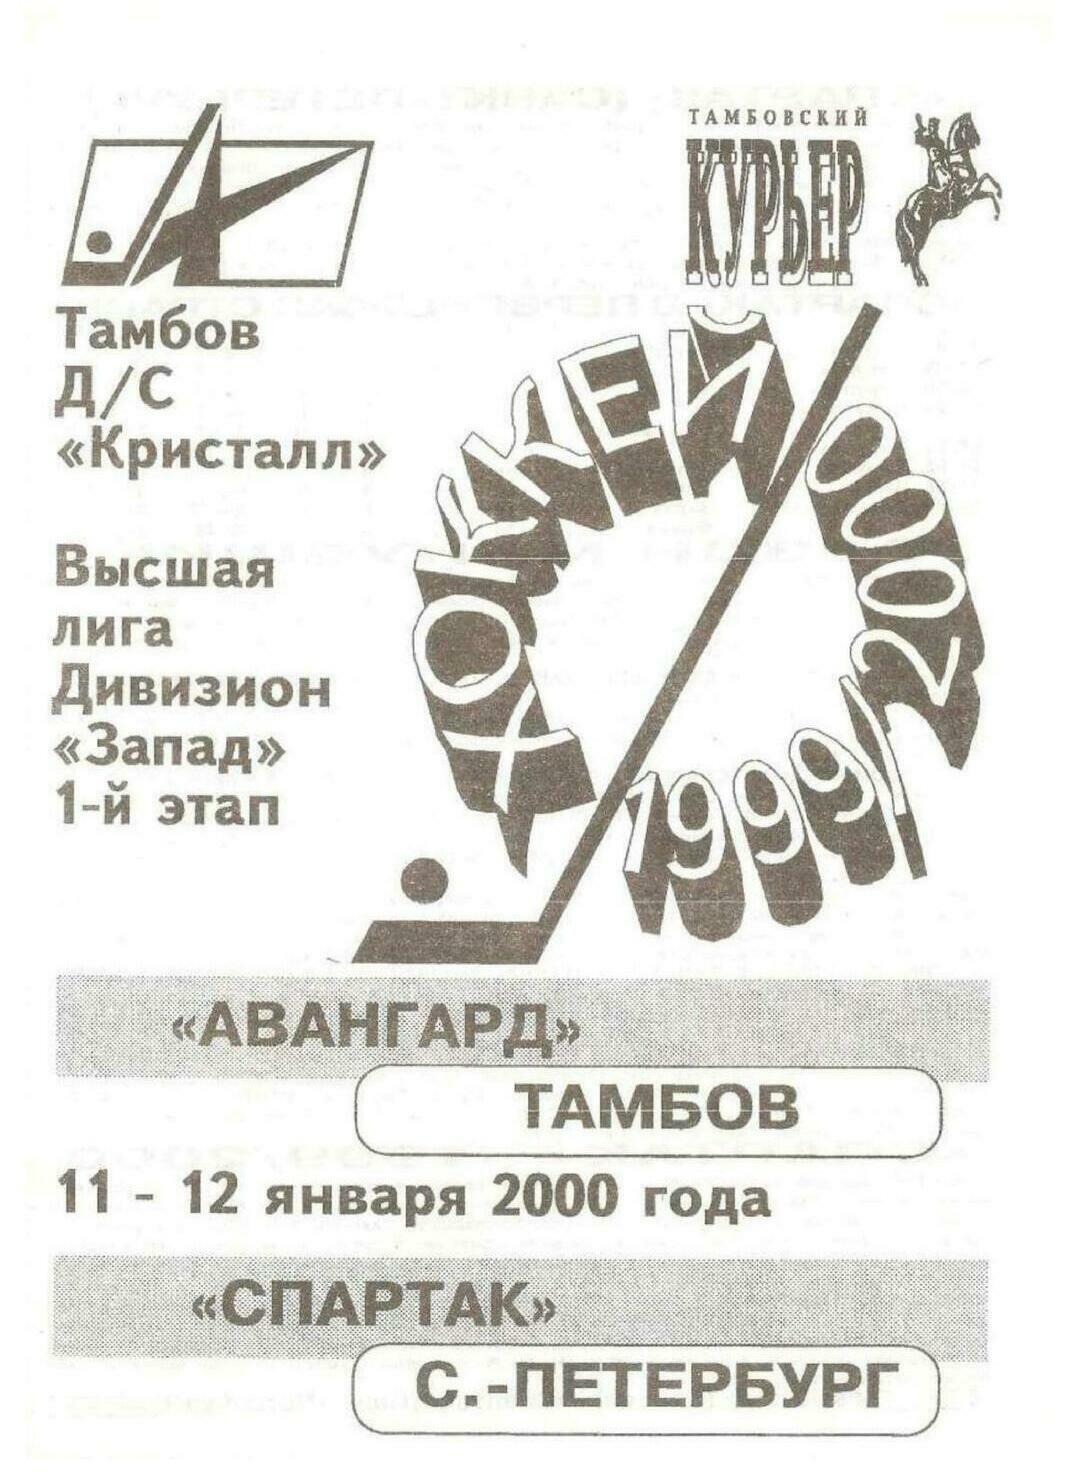 Программа "Авангард" Тамбов - "Спартак" Санкт-Петербург №53 от 11-12.01.2000г.